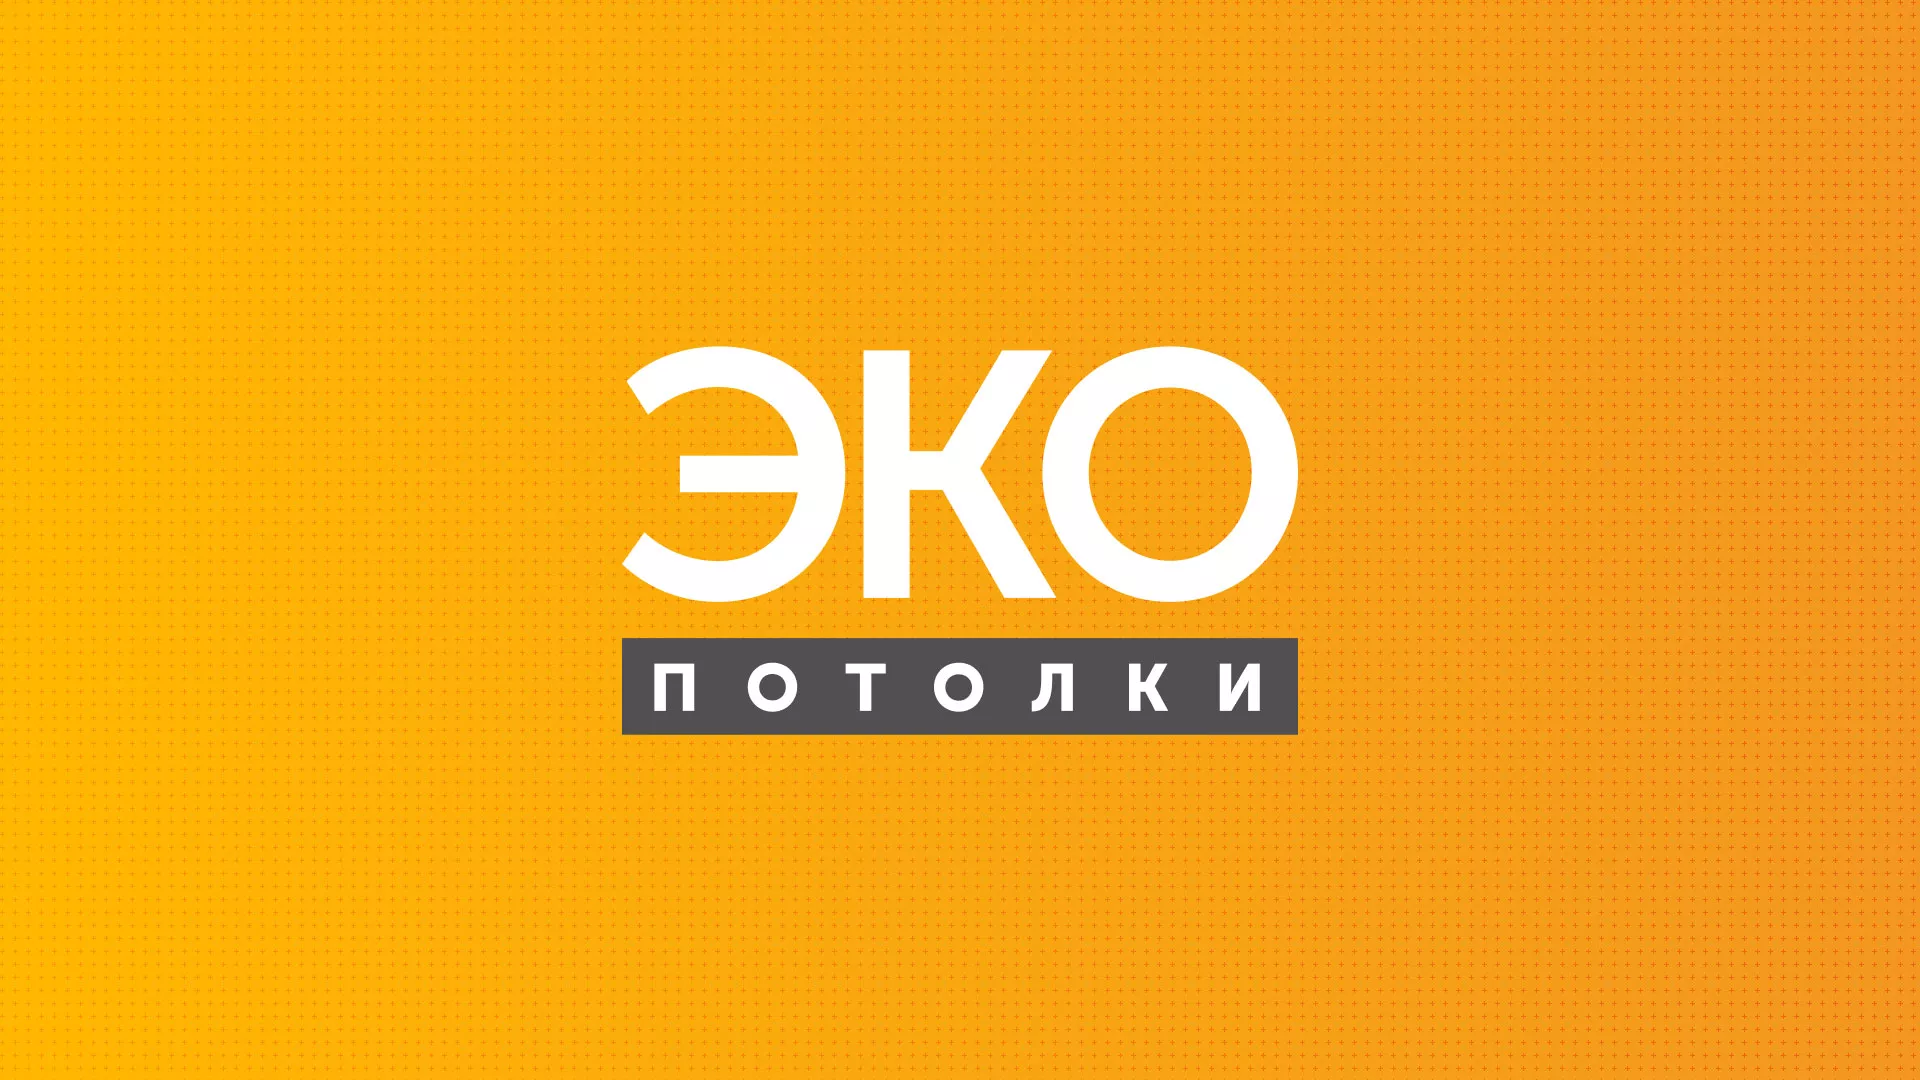 Разработка сайта по натяжным потолкам «Эко Потолки» в Катав-Ивановске